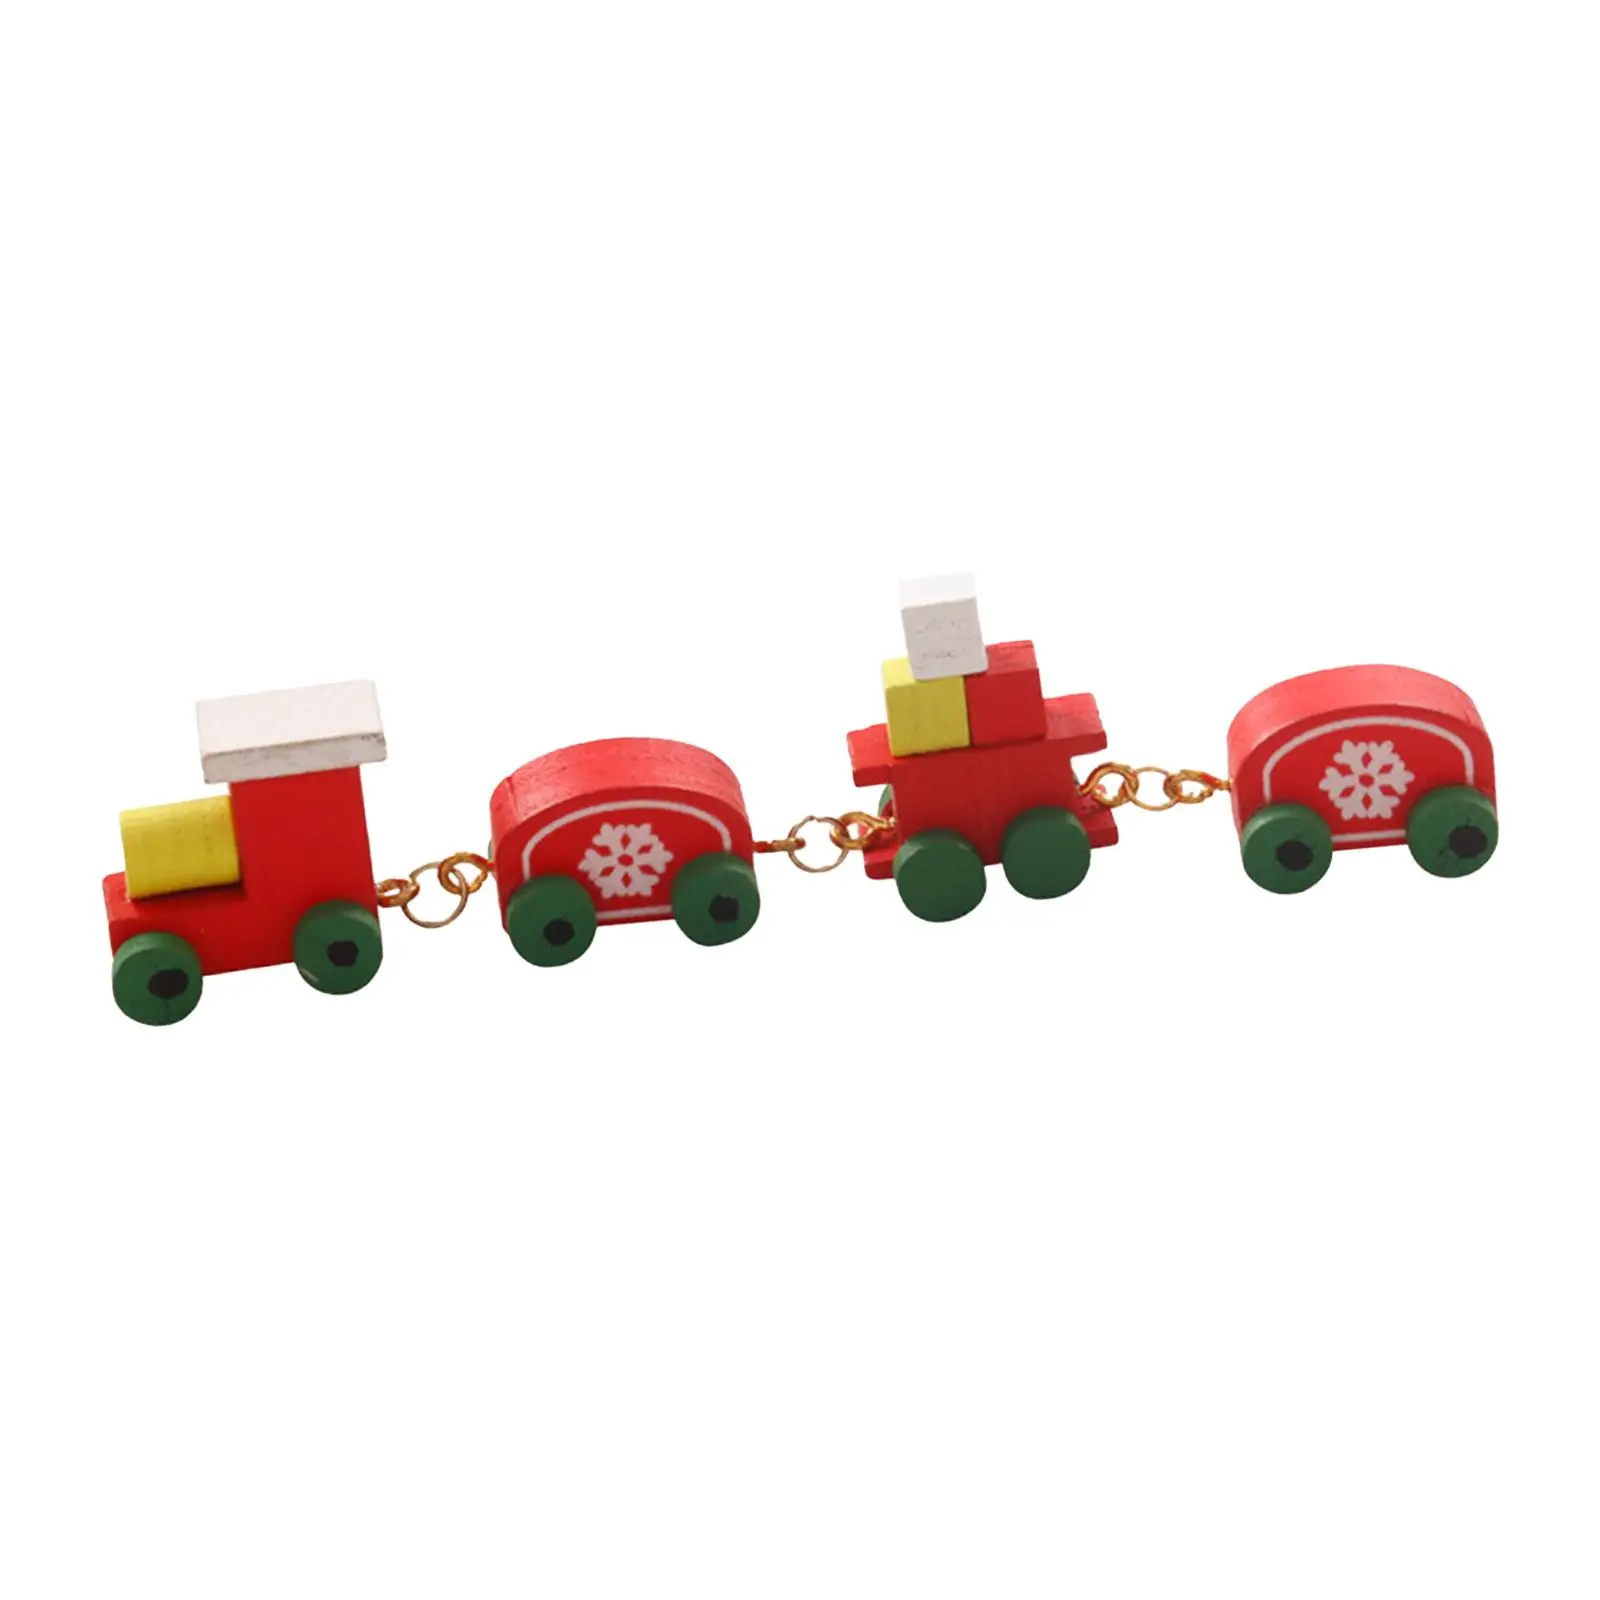 1/12 Dollhouse Mini Christmas Train for Building Model Train Railway Station